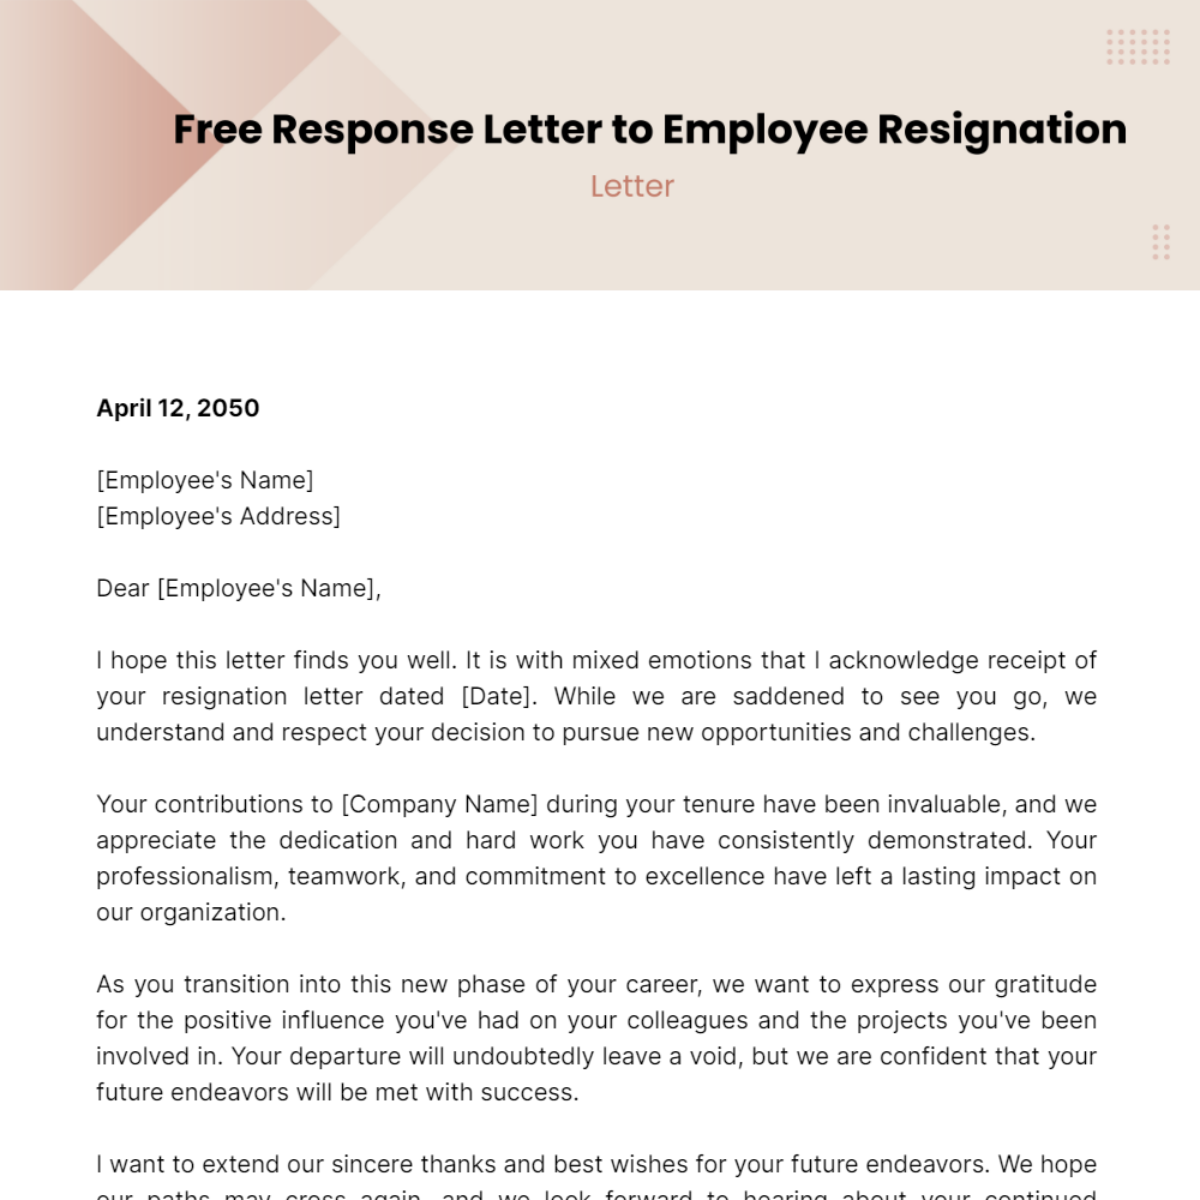 Free Response Letter to Employee Resignation